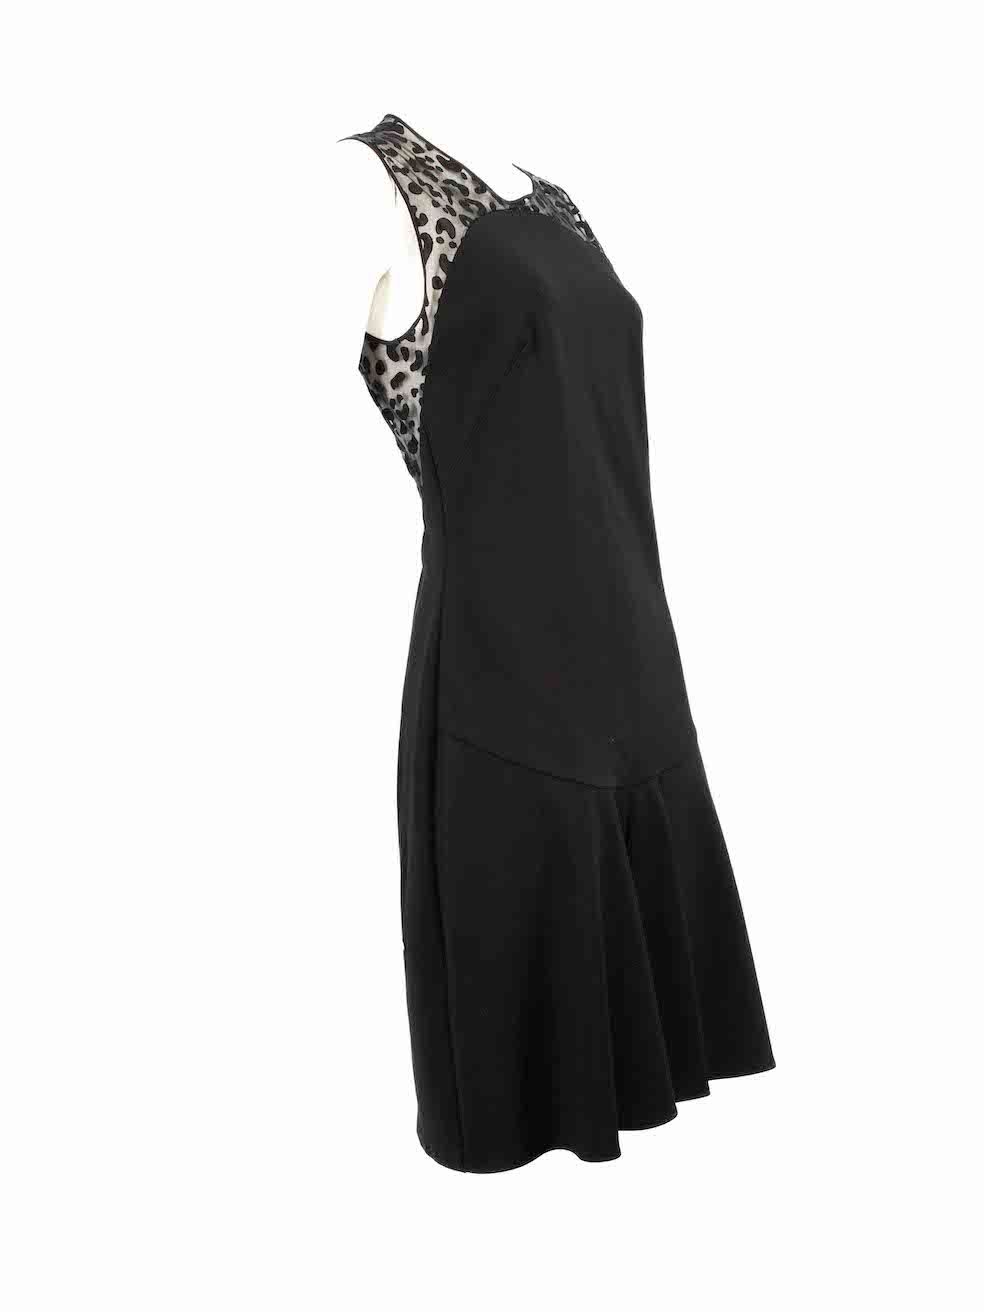 Stella McCartney Black Crew Neck Sleeveless Dress Size M / US 6-8 / IT 42-44 - 2 Preview